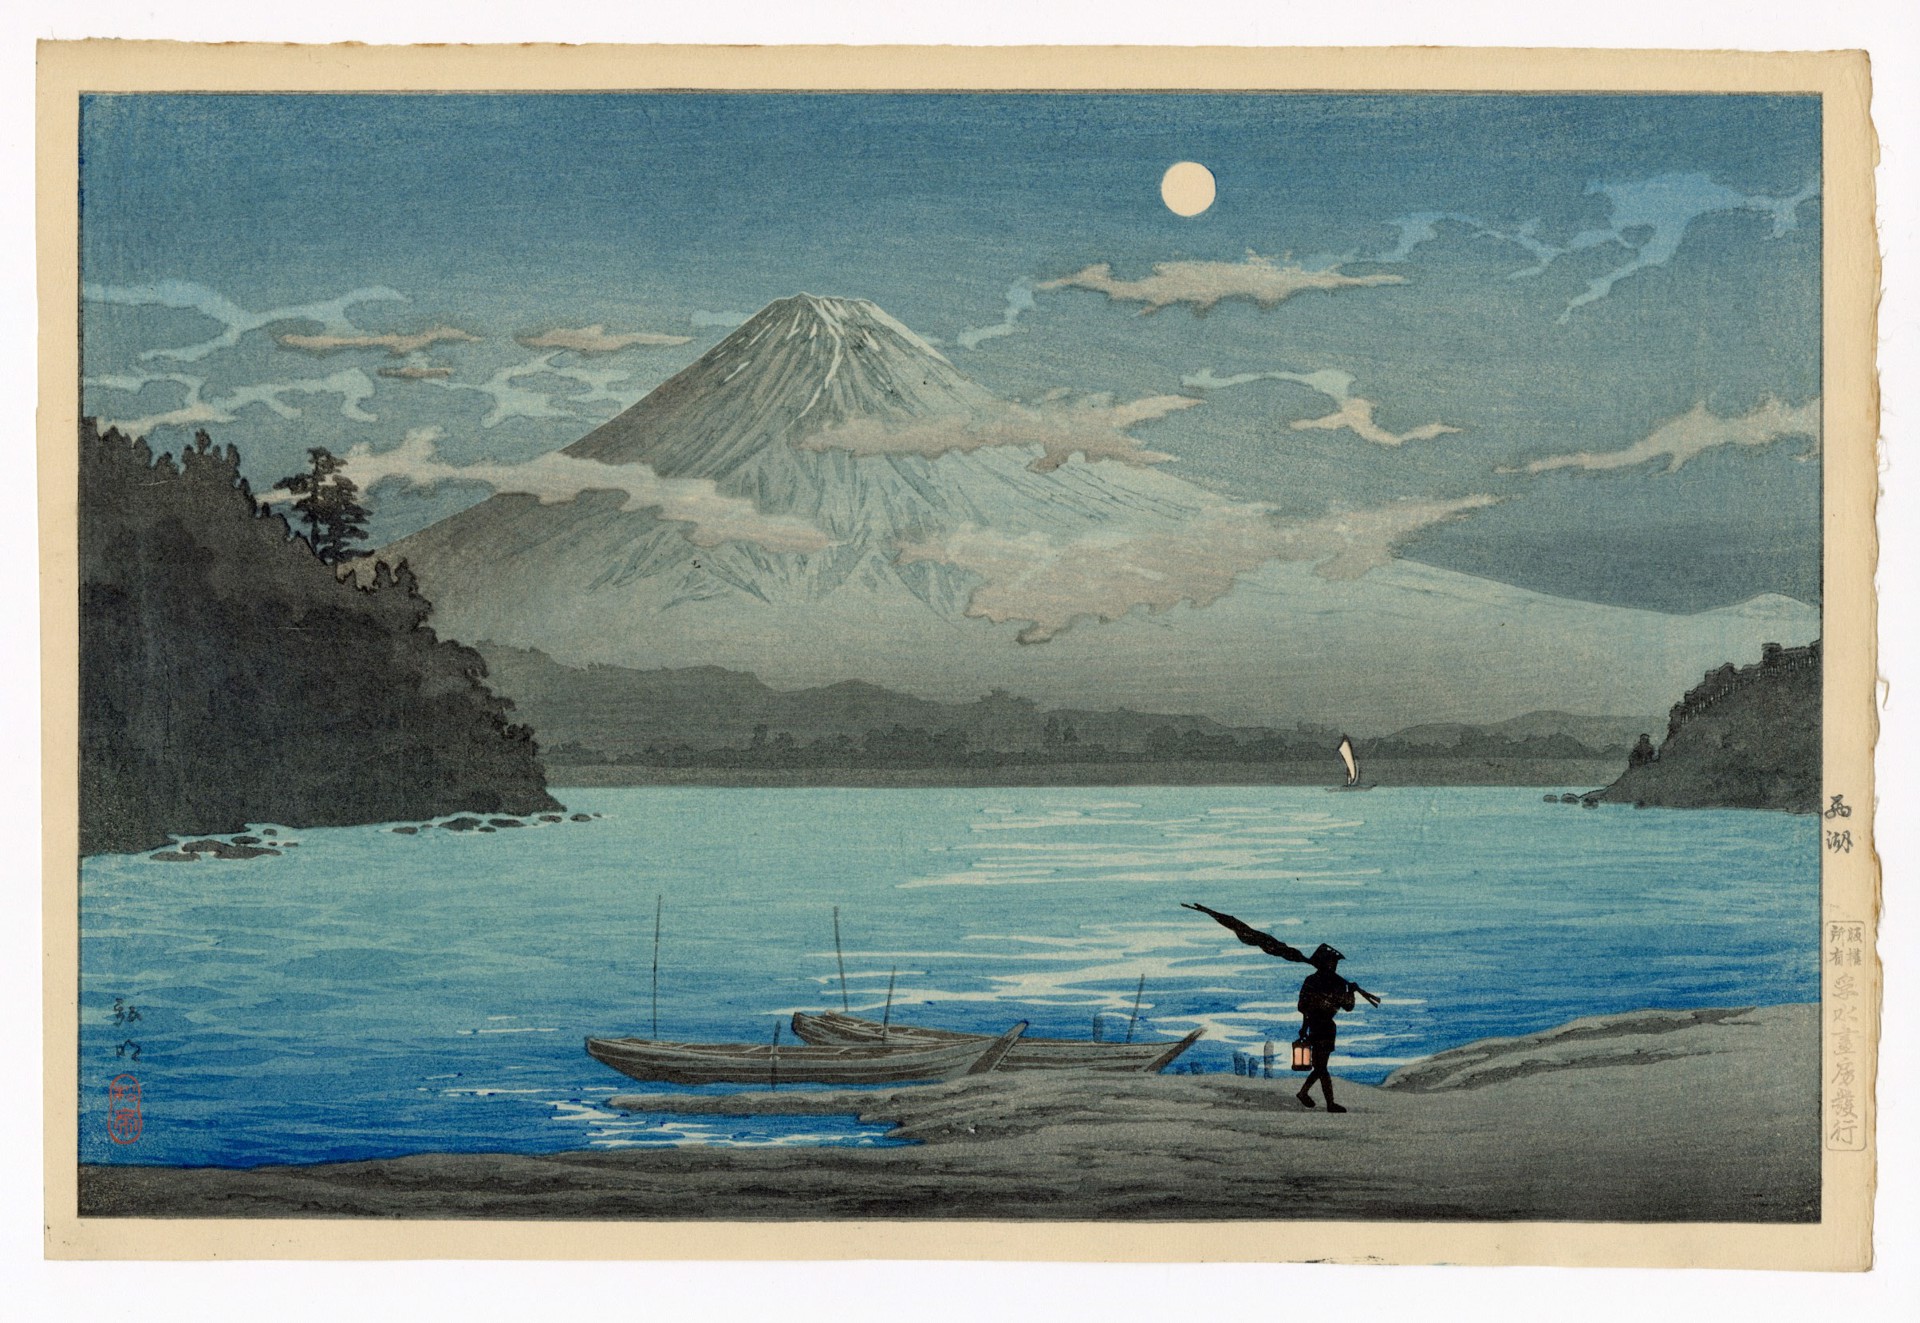 Lake Saiko Mt. Fuji in the Four Seasons by Takahashi Hiroaki